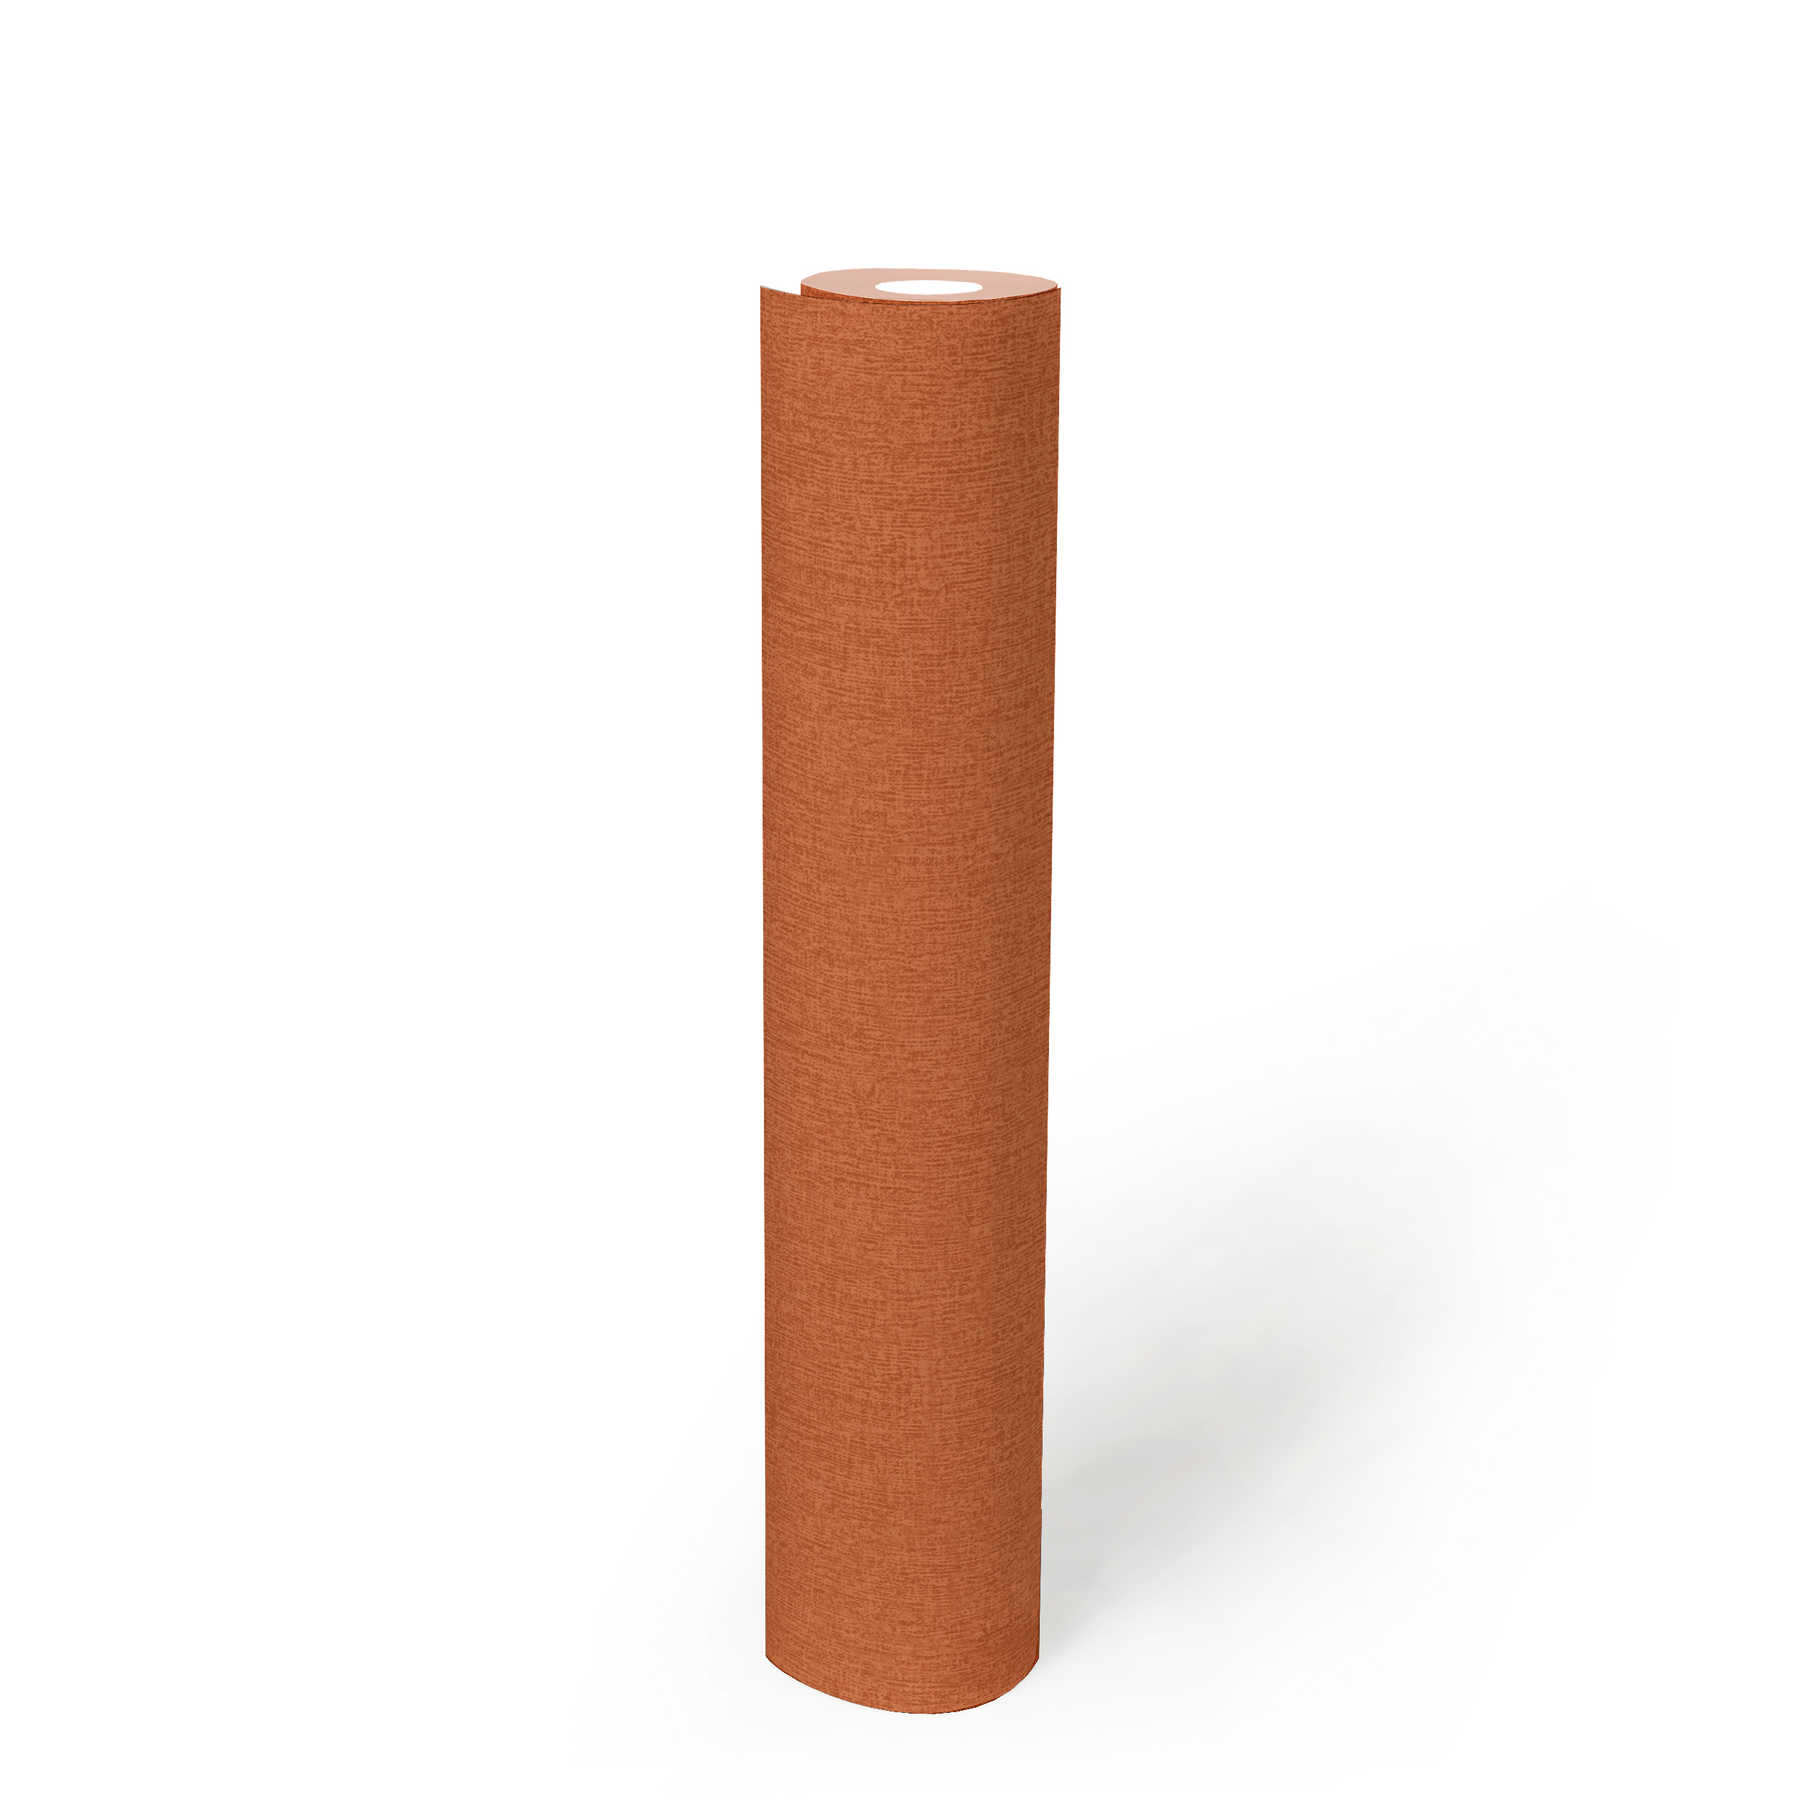             Plain wallpaper mottled with fabric texture - orange
        